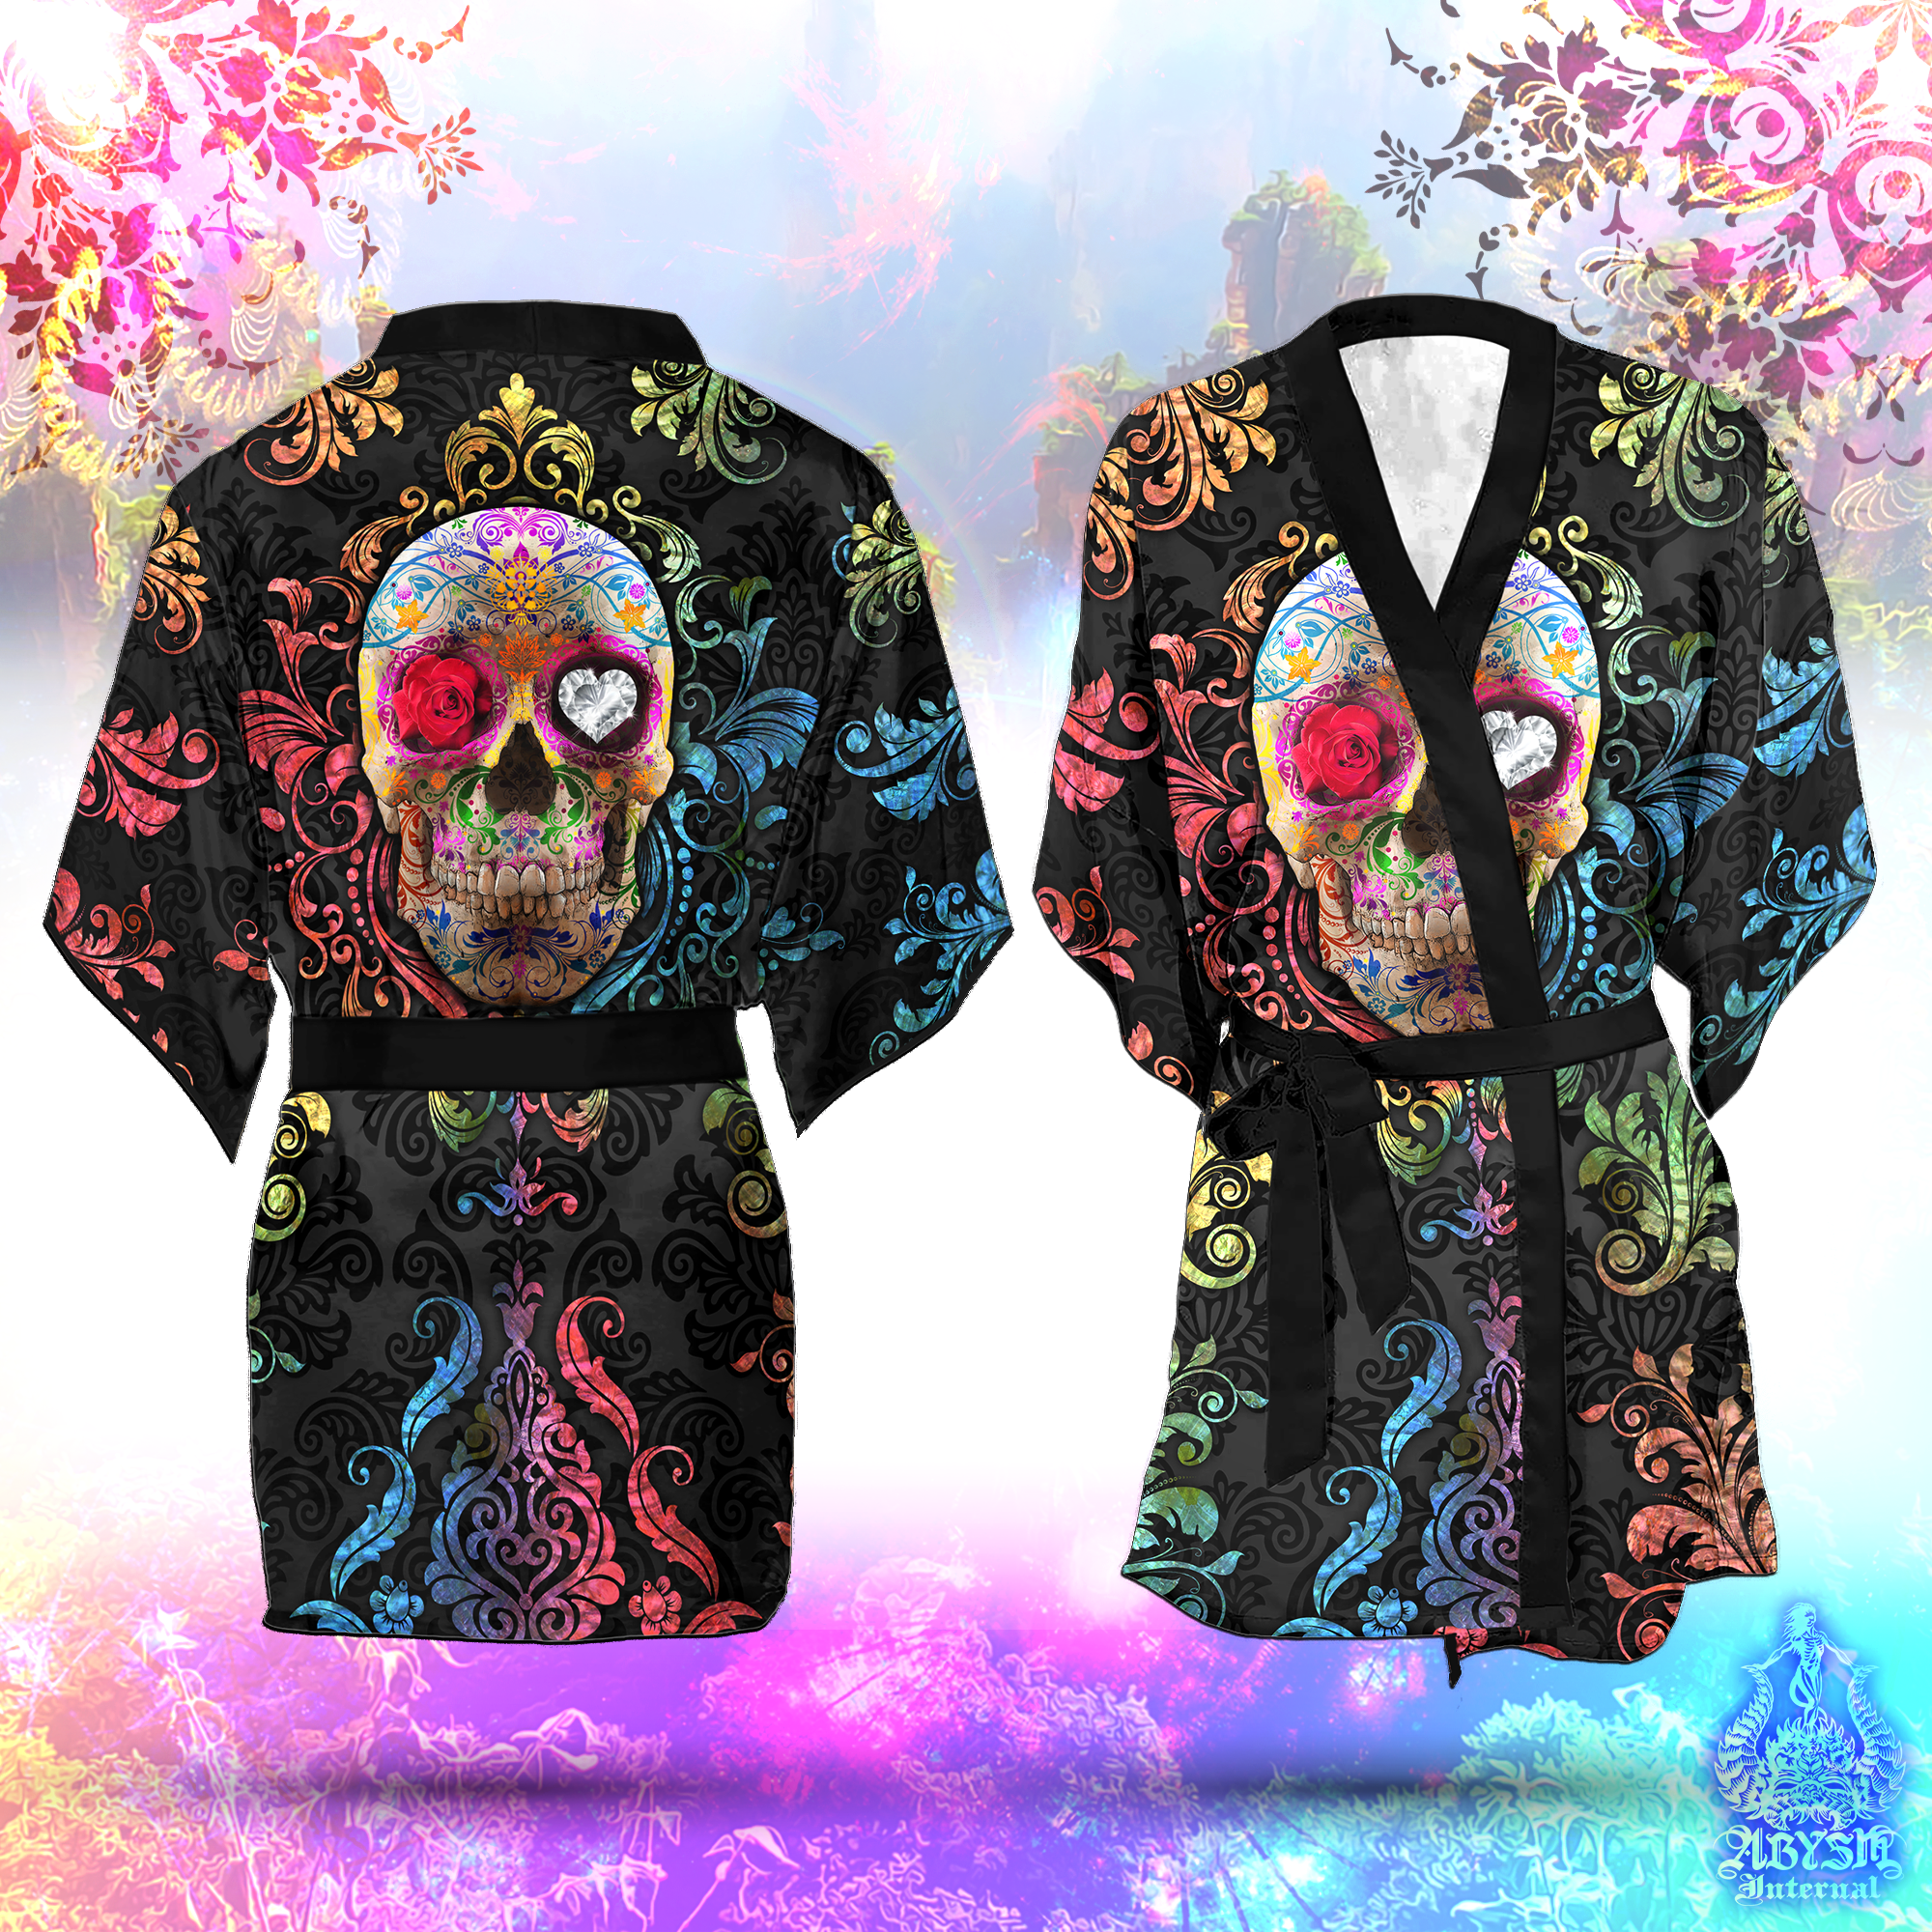 Sugar Skull Kimono, Dressing Robe, Open Shirt, Boho Festival Outfit, Alternative Clothing, Summer Streetwear, Unisex - Day of the Dead - Abysm Internal